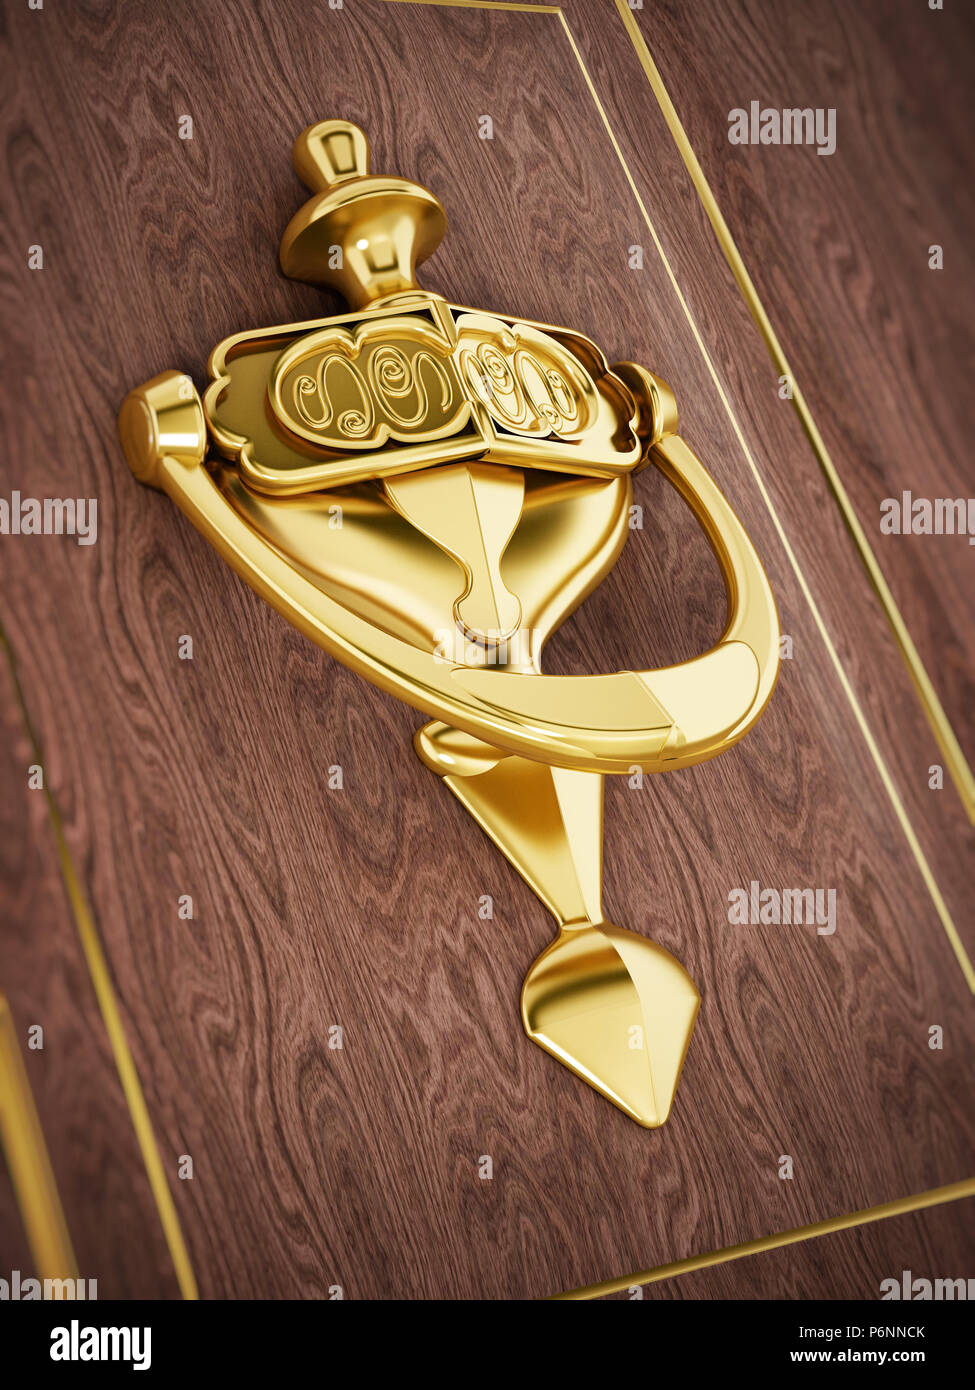 Golden door knocker sur porte en bois. 3D illustration. Banque D'Images